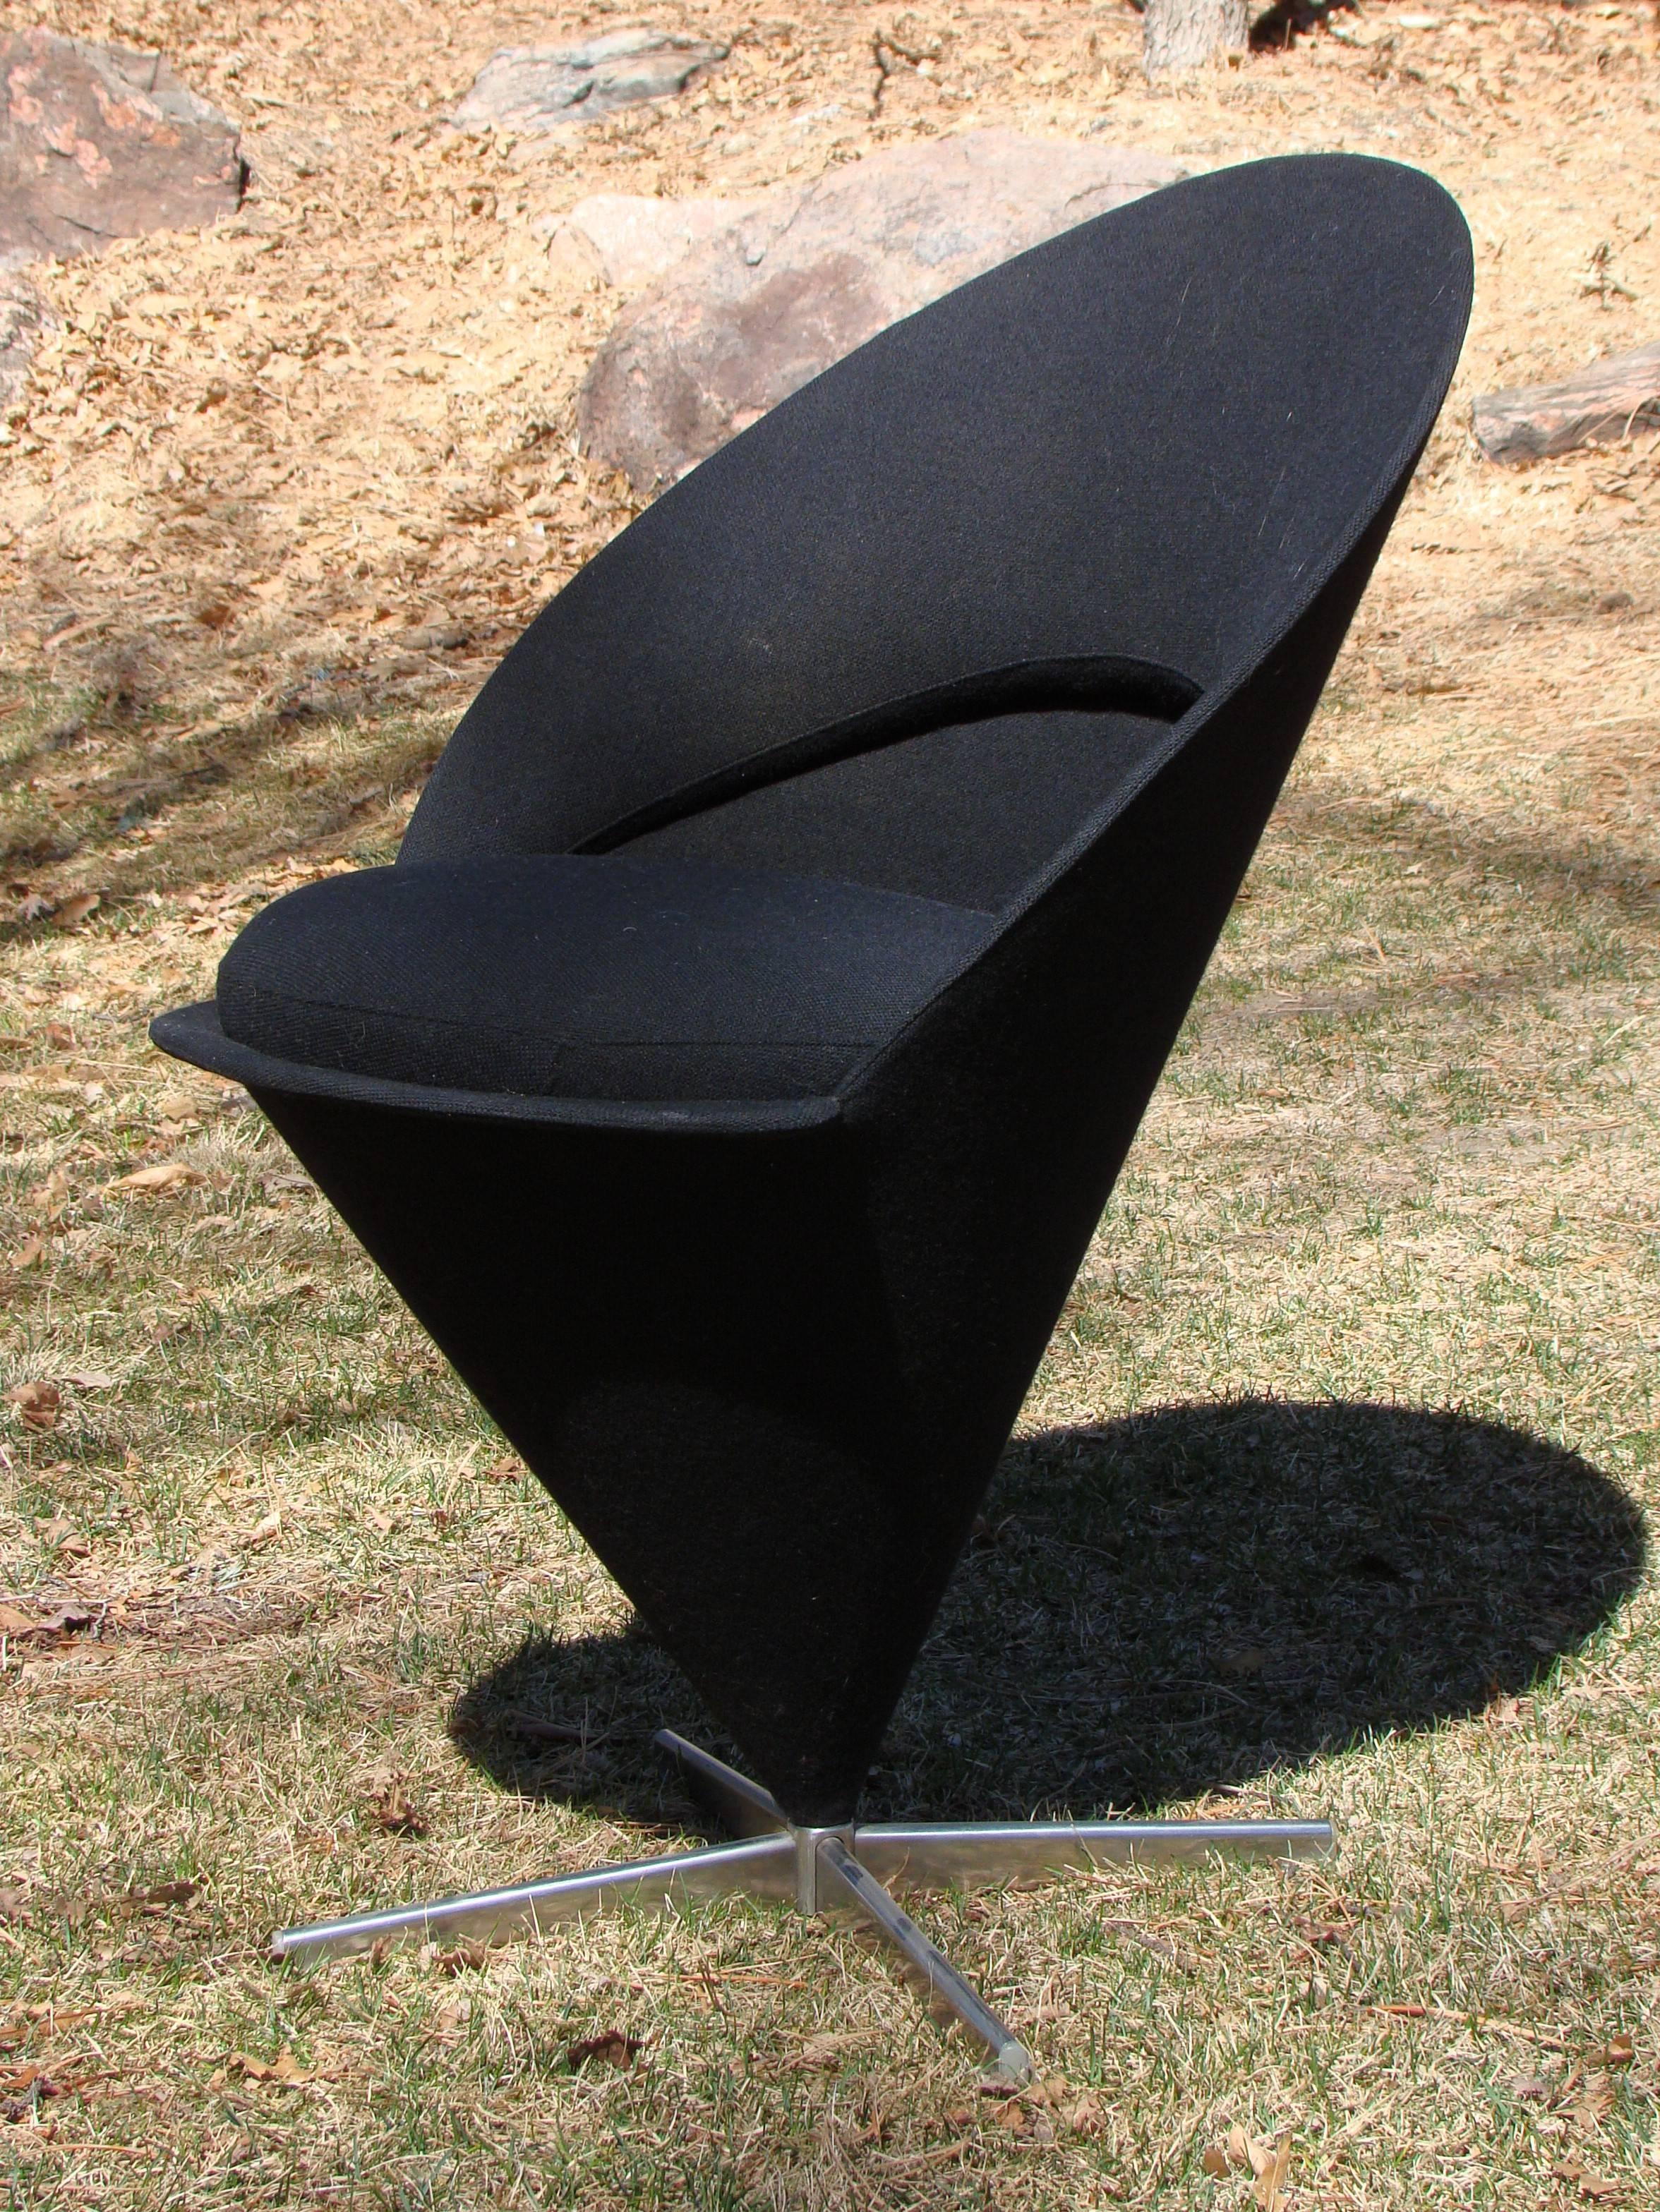 Stainless Steel Original 1960s Vintage Verner Panton Cone Chair, Denmark For Sale